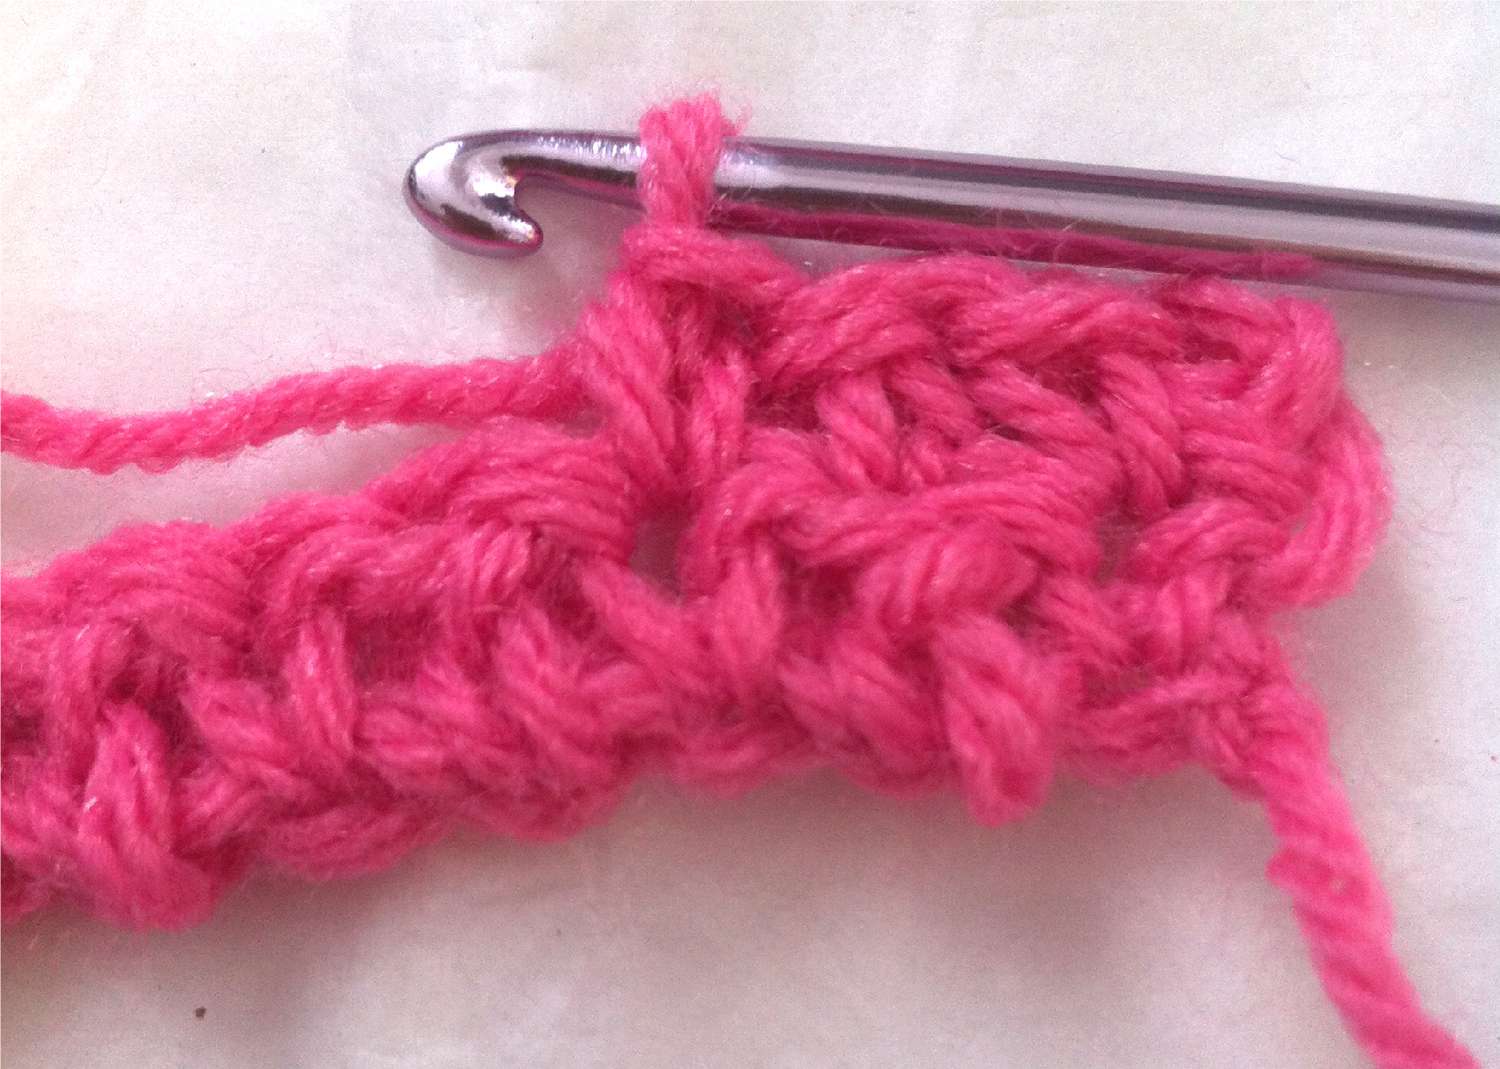 Crochet seed stitch